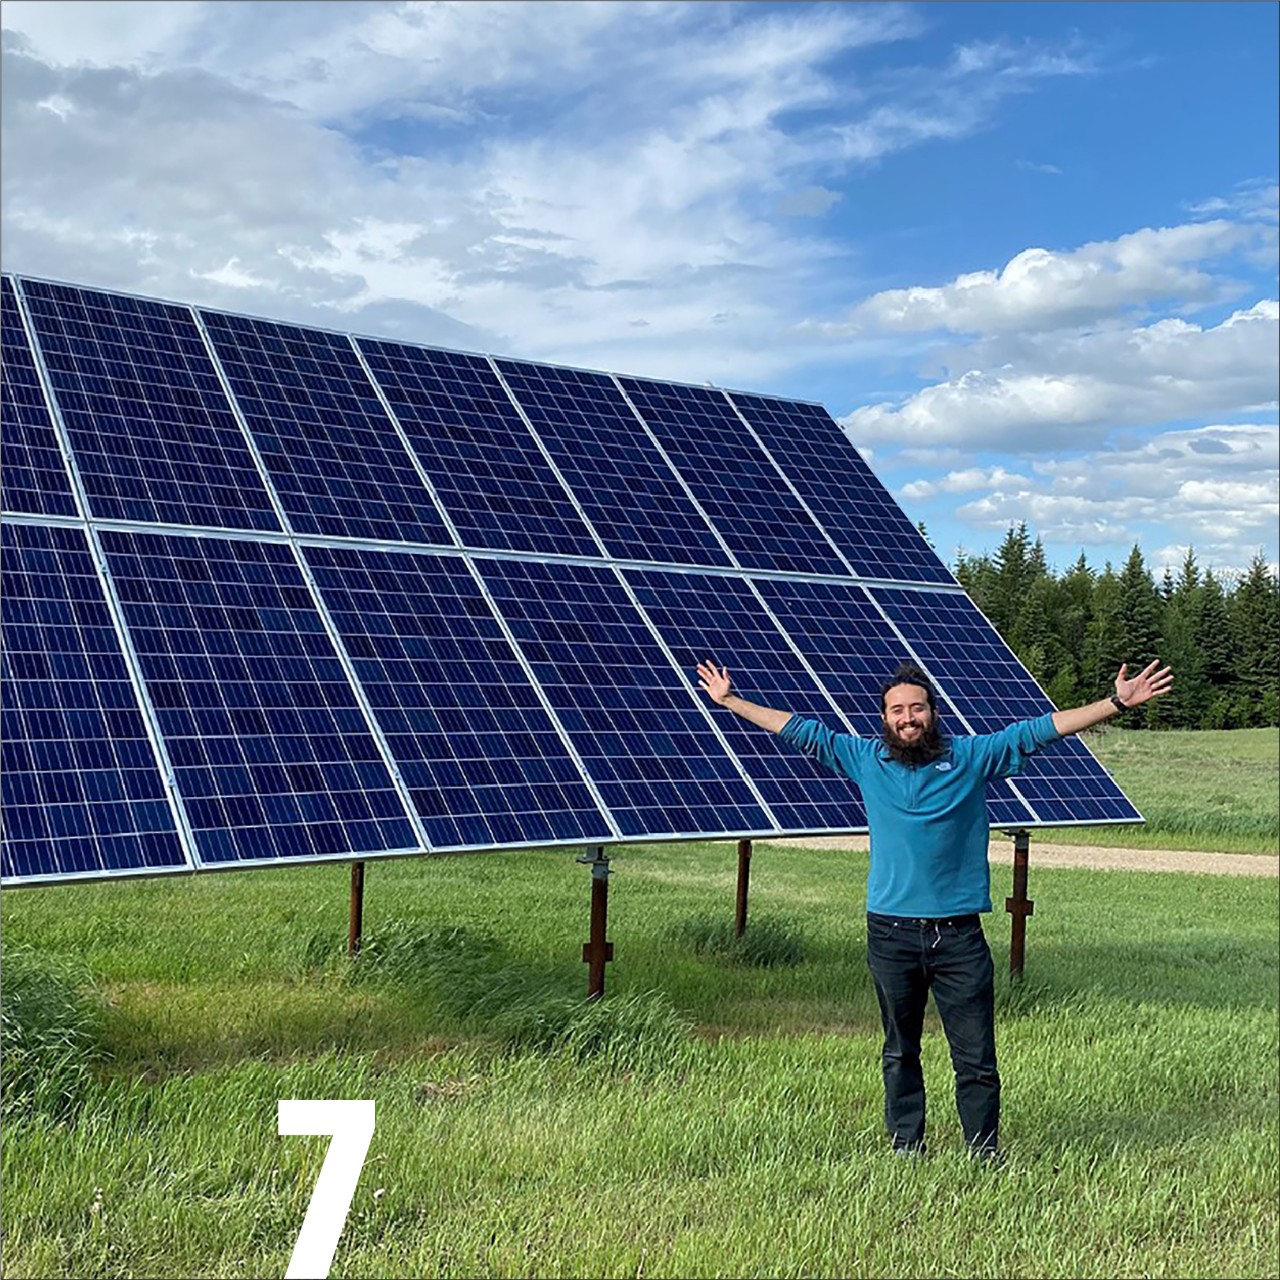 Gabriel Soares standing in front of solar panel